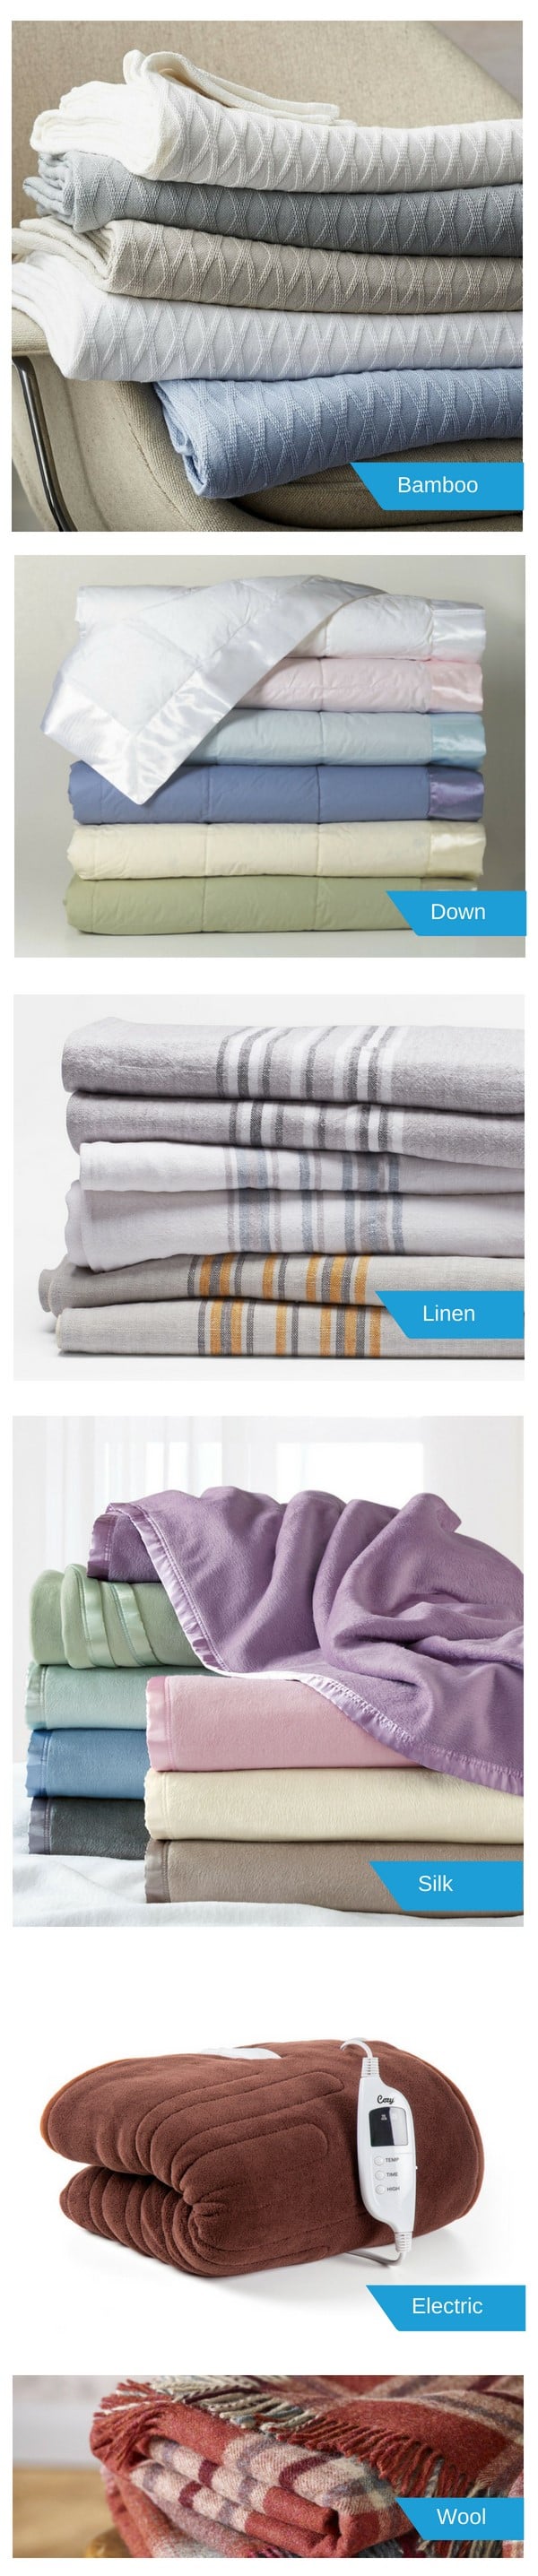 Blanket fabrics